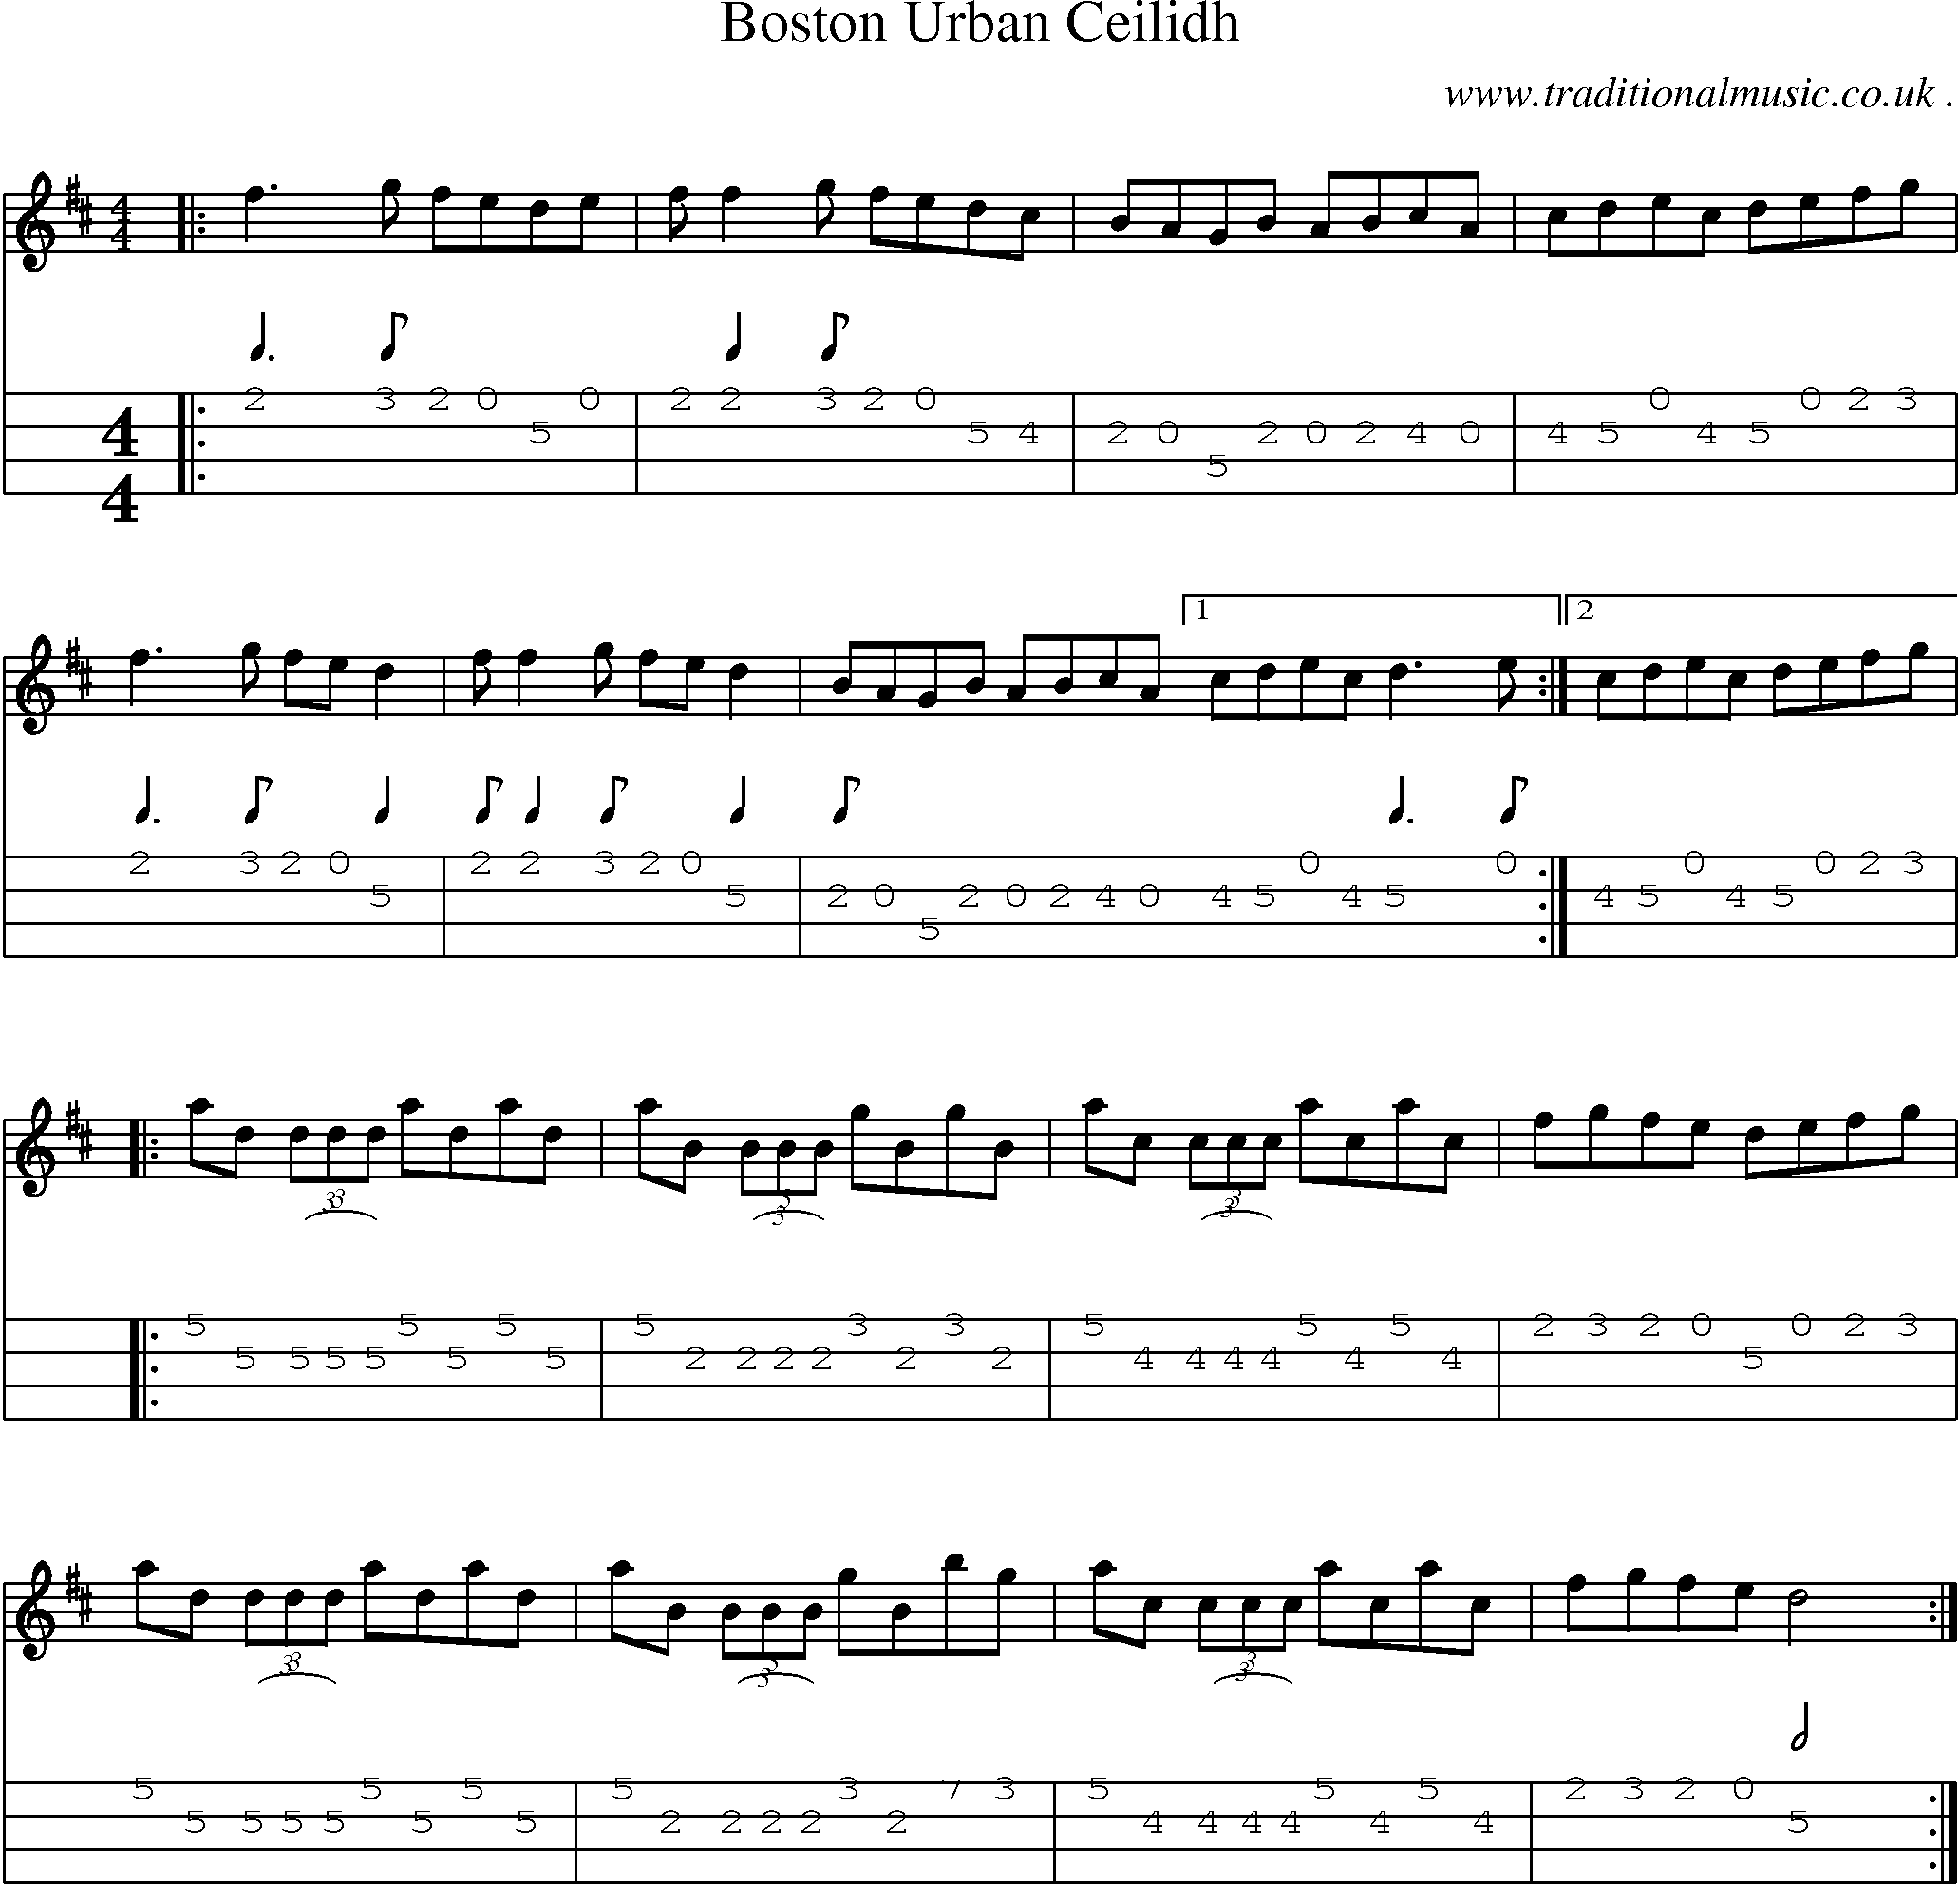 Sheet-music  score, Chords and Mandolin Tabs for Boston Urban Ceilidh